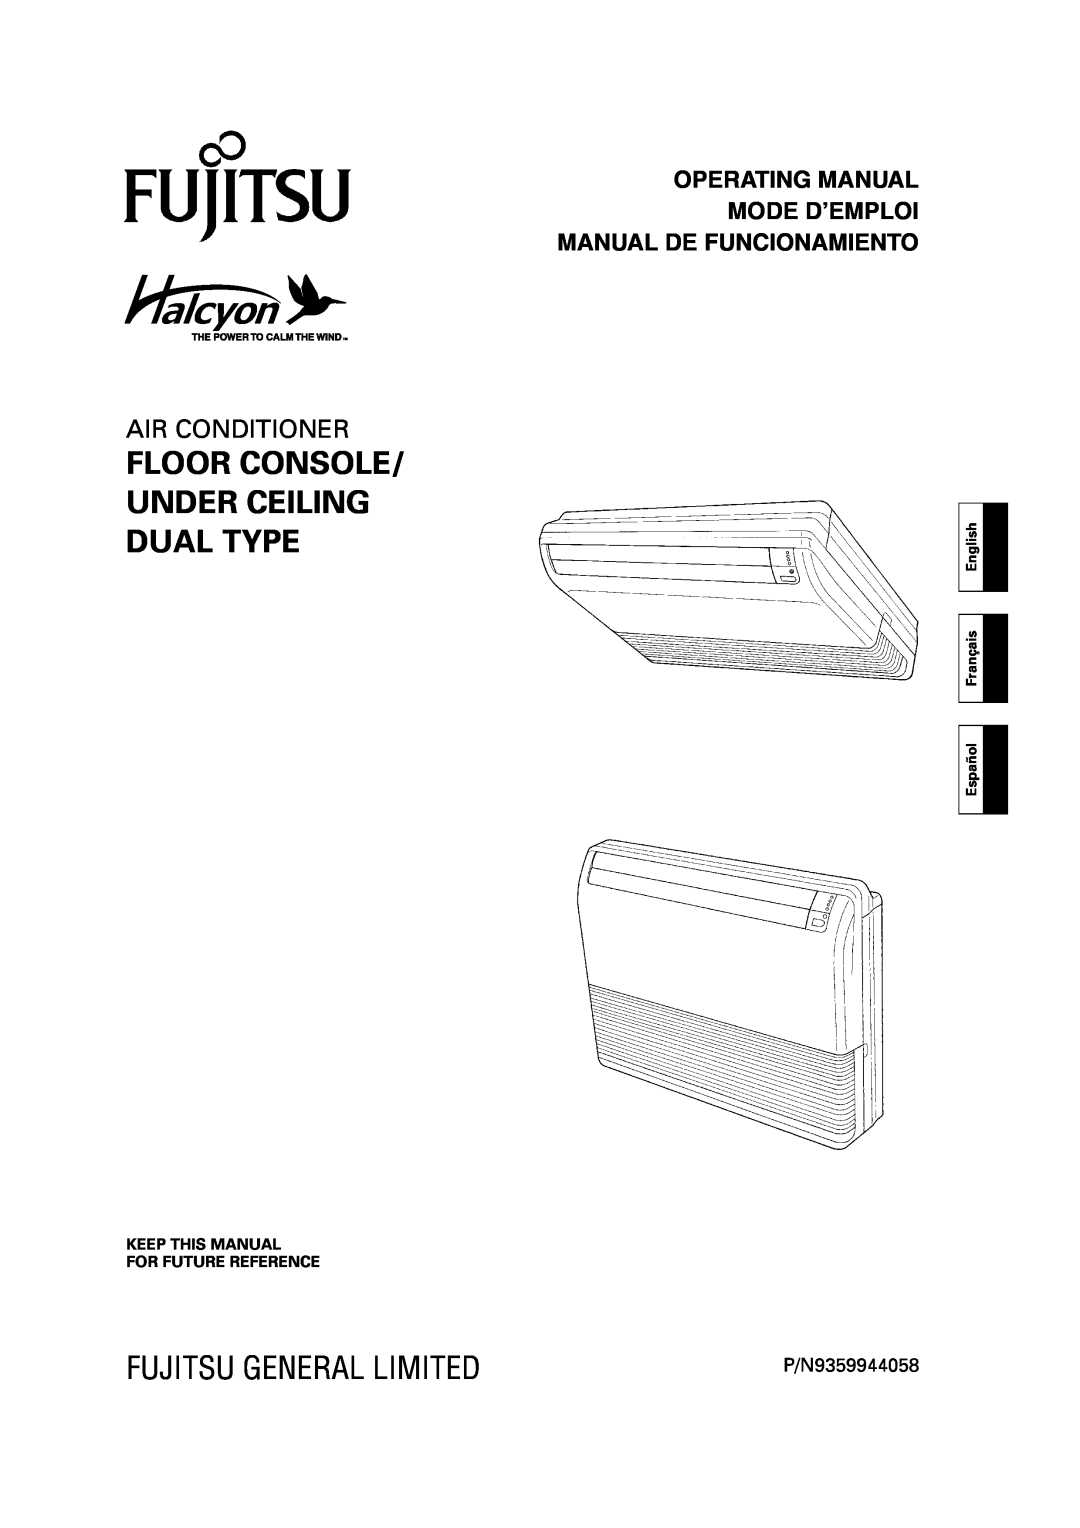 Fujitsu P/N9359944058 manual Floor Console/ Under Ceiling Dual Type, Fujitsu General Limited, Air Conditioner 